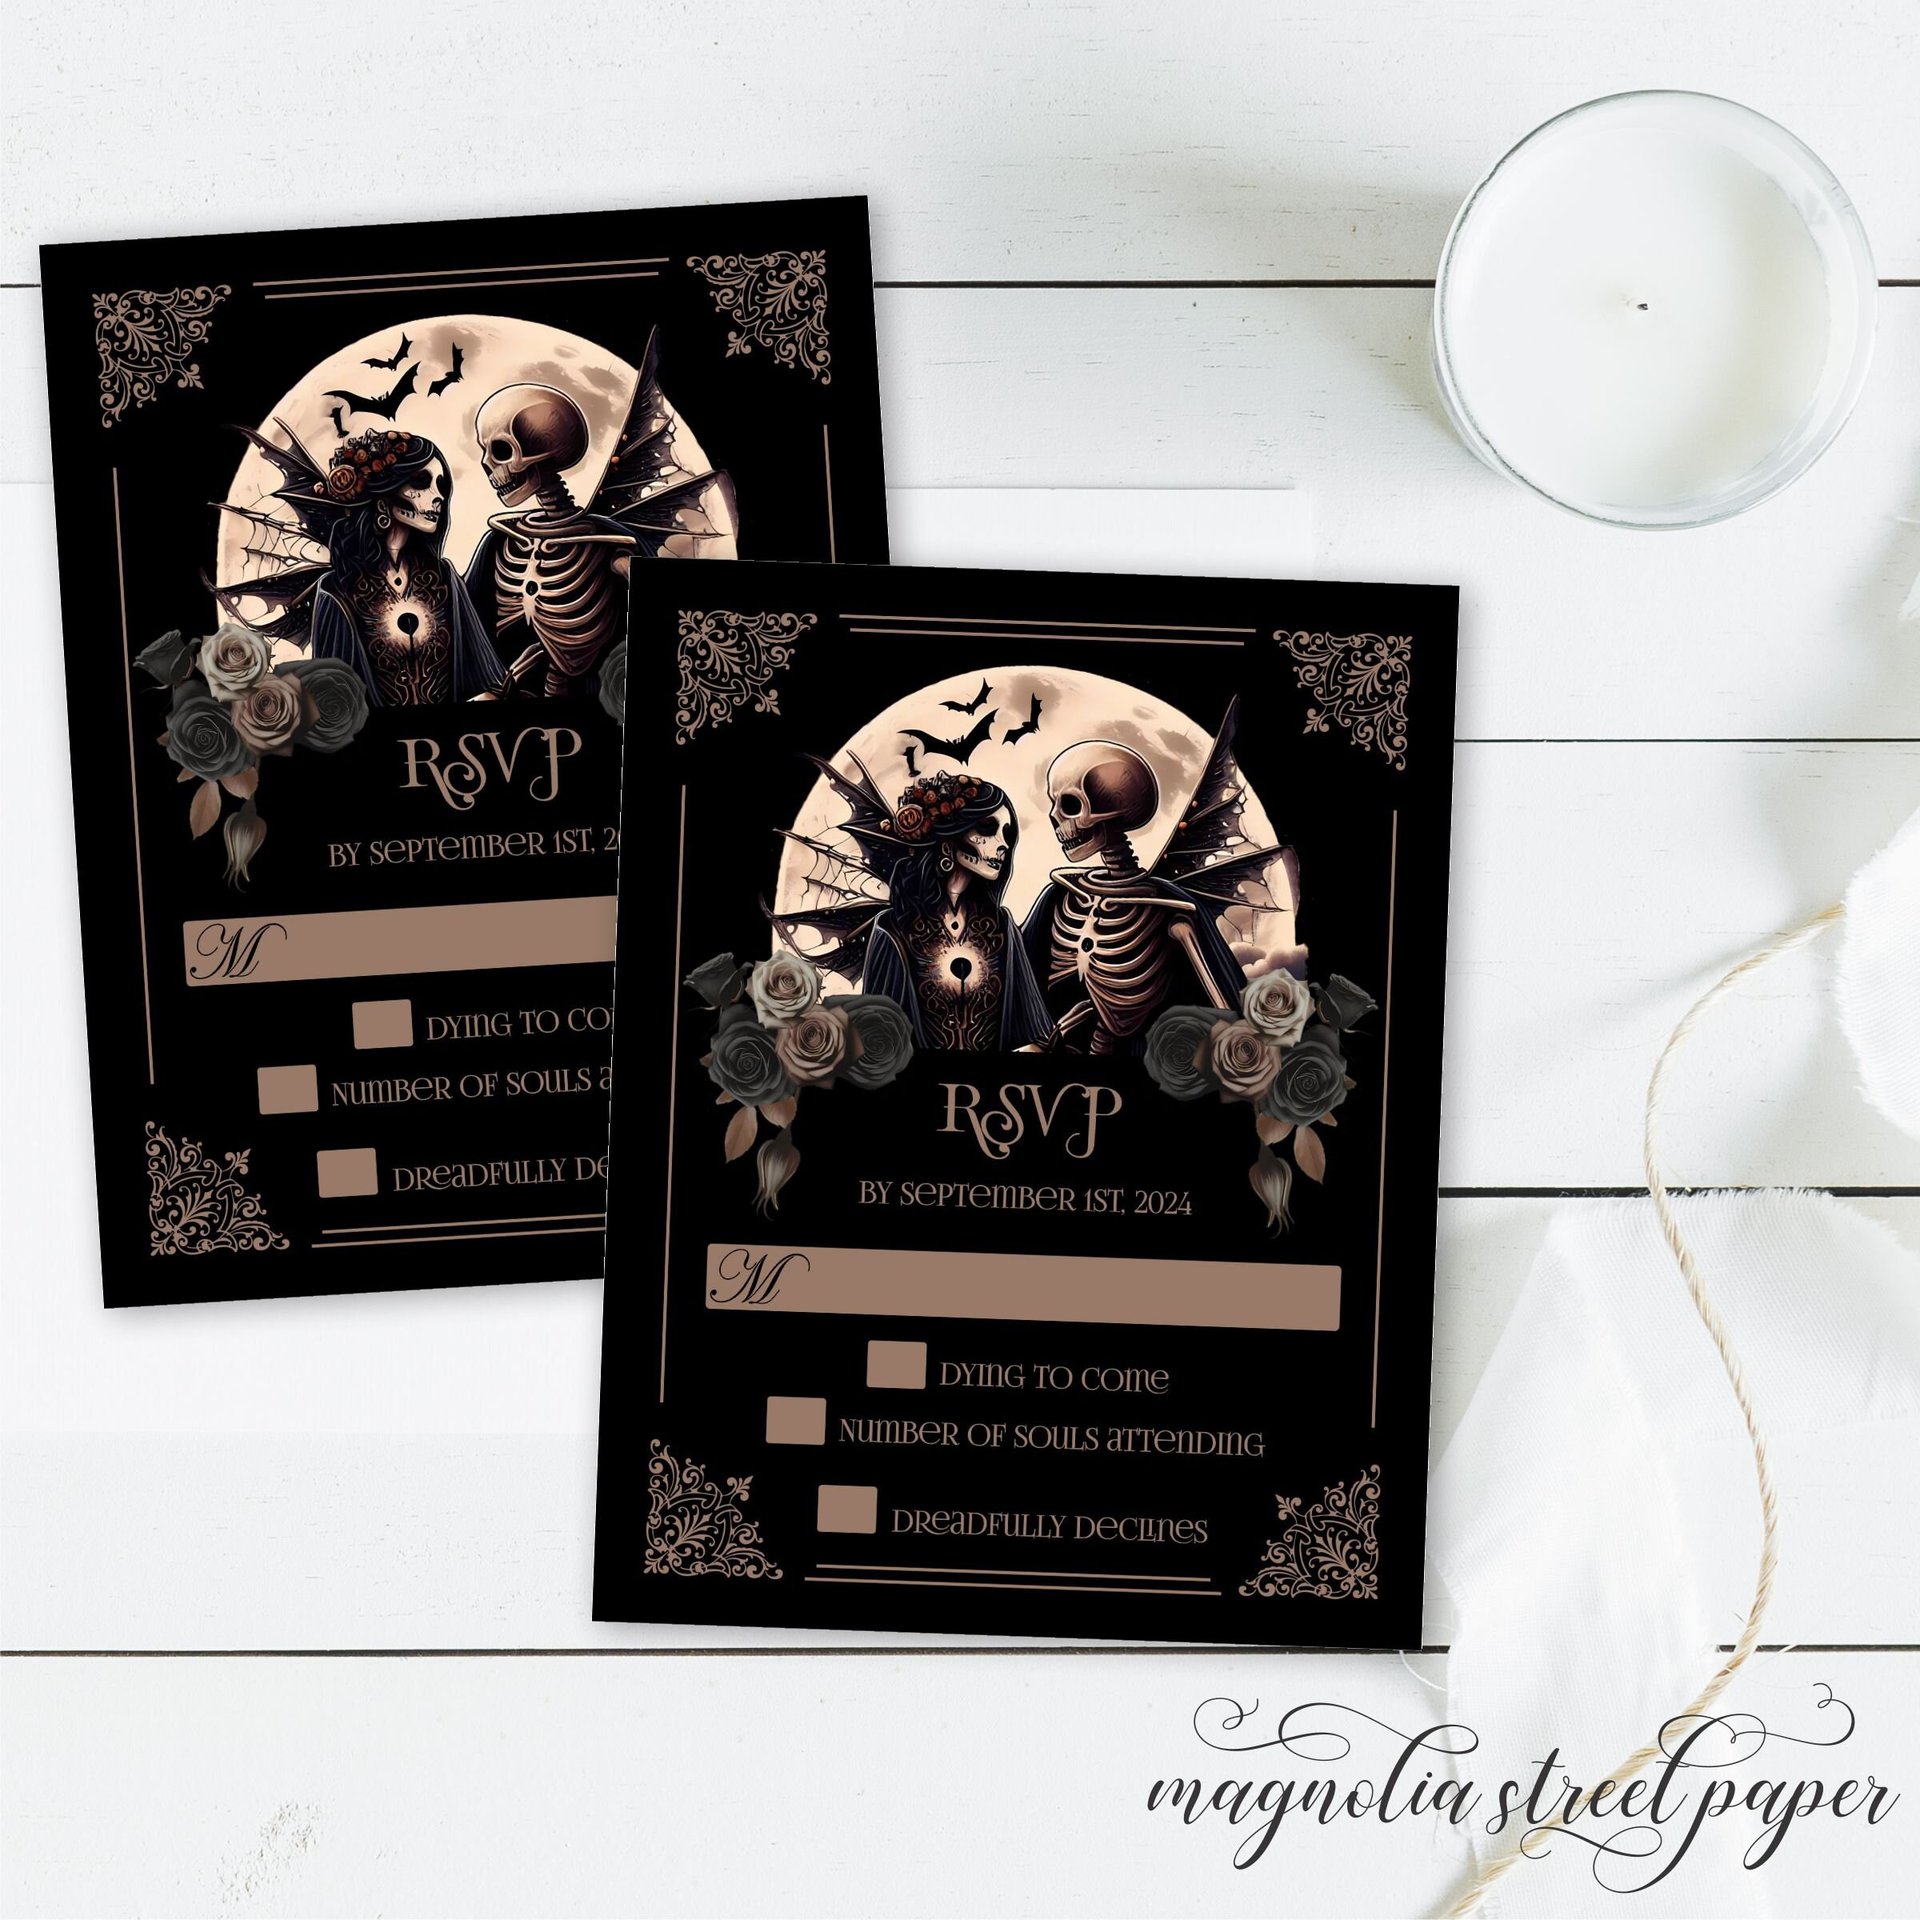 Halloween Goth Wedding Invitation, The Lovers Tarot Card Wedding Suite